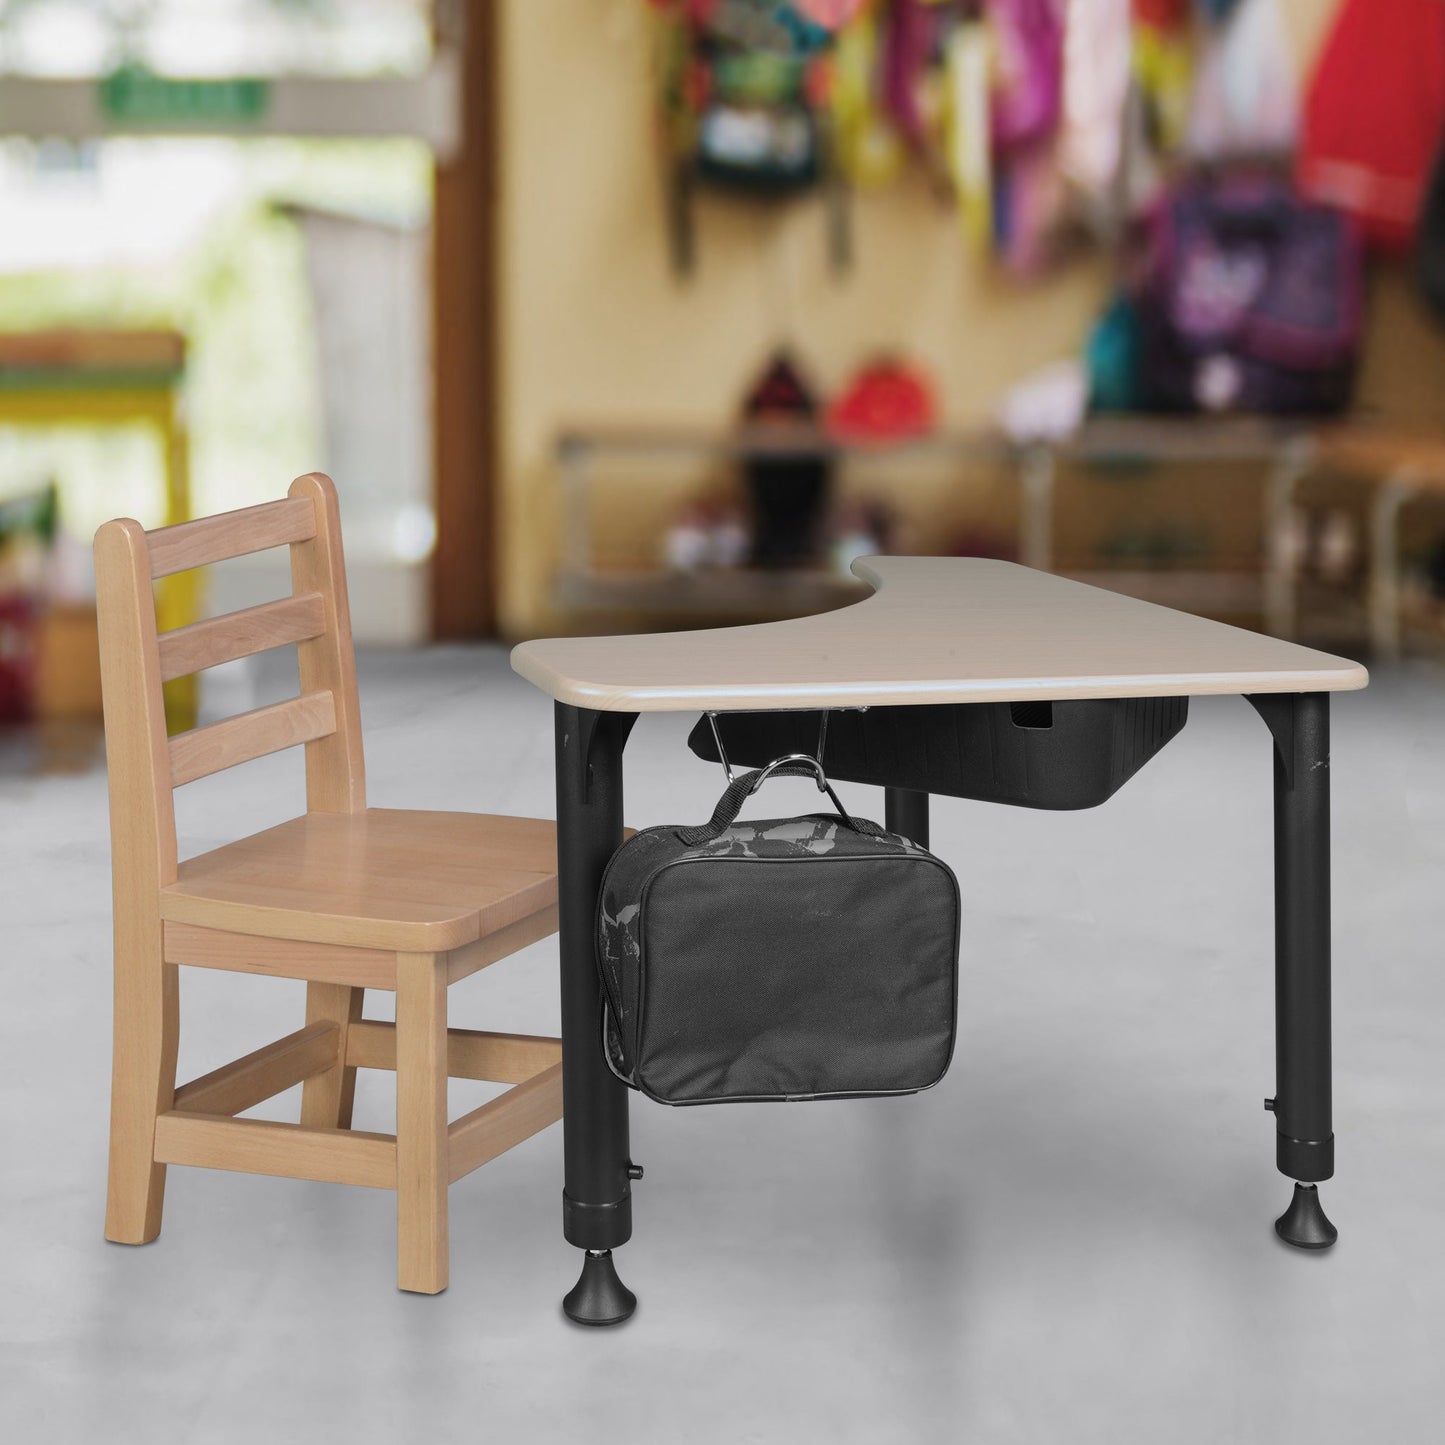 Regency 28" Boomerang Height Adjustable Plastic Top Activity School Desk with Book Storage and Backpack Hook (Maple)